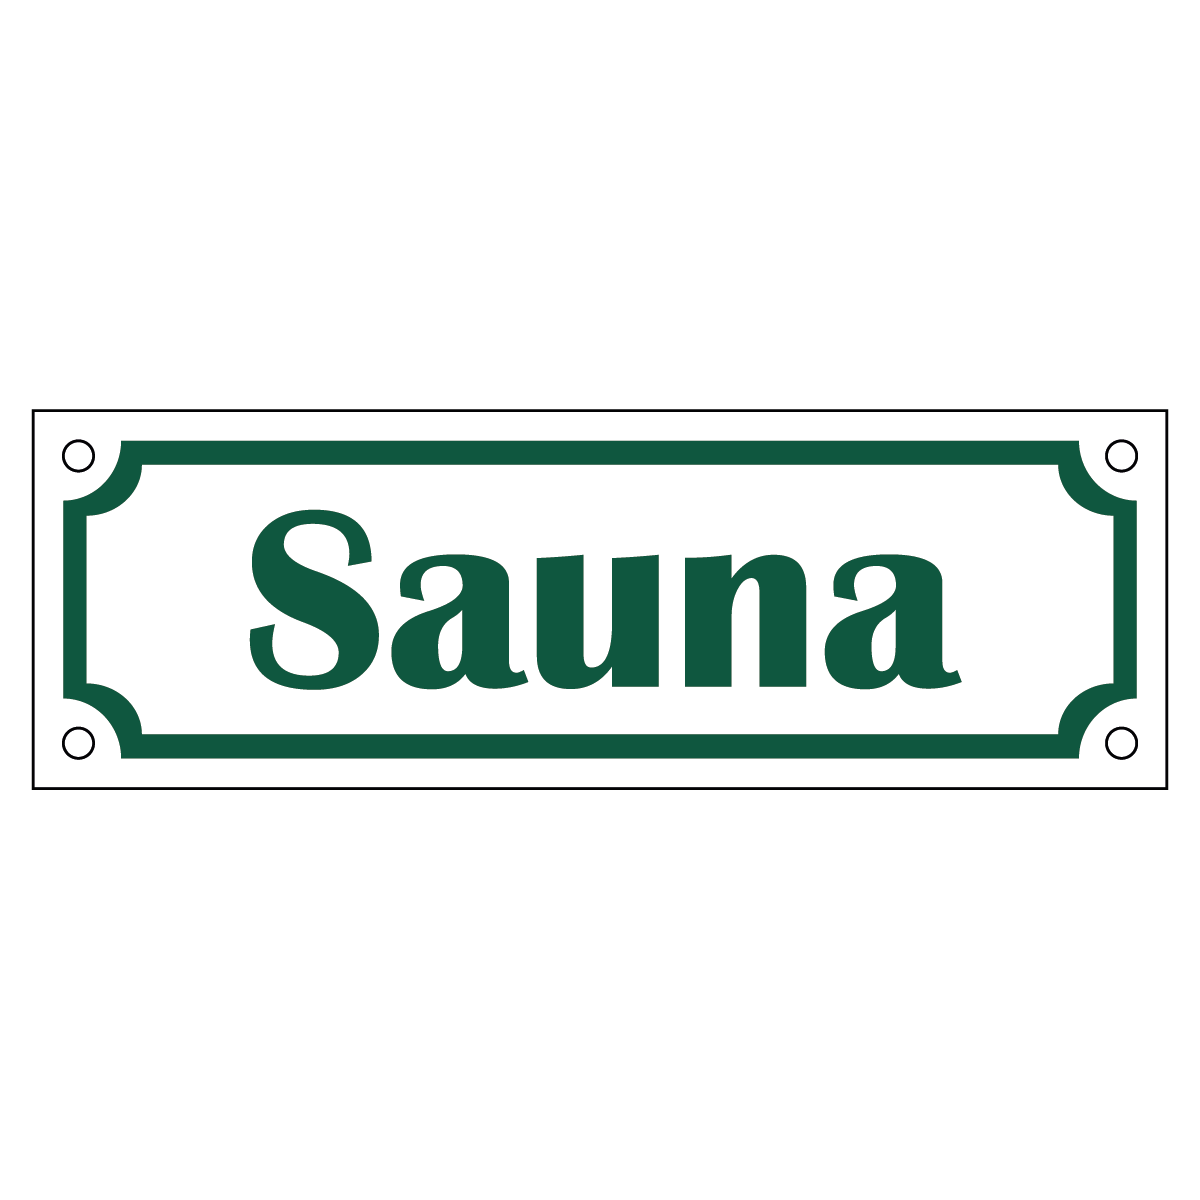 Sauna - Skylt - 150x50mm - Vit - Grön